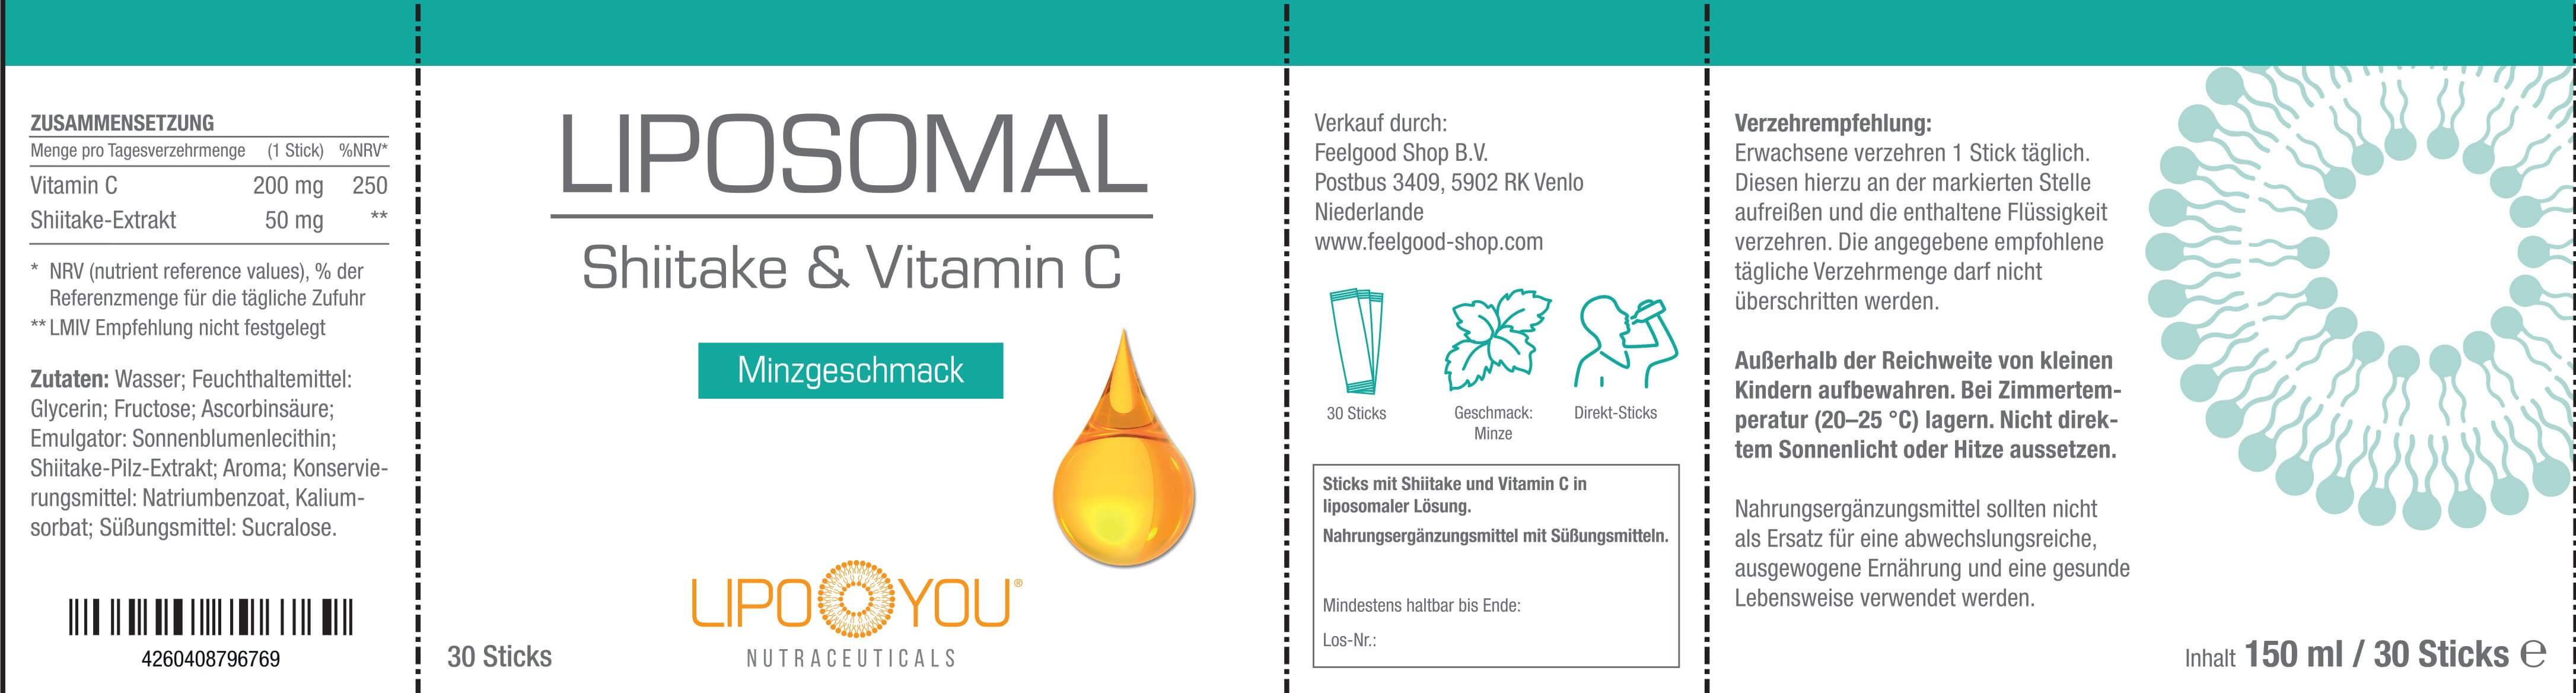 LIPOSOMAL Shiitake & Vitamin C Etikett